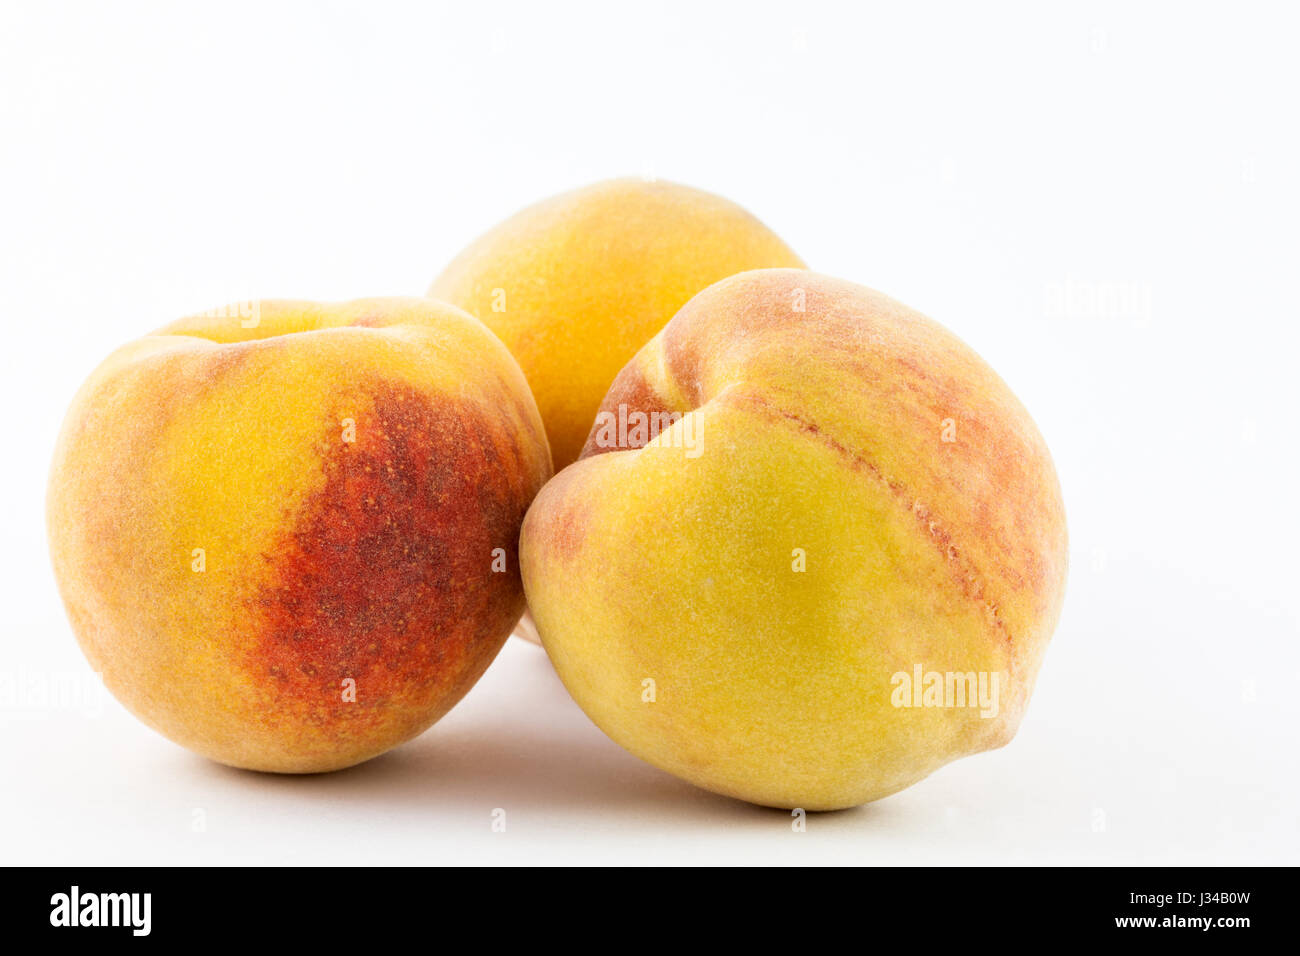 Peach (Prunus persica) isolated in white background Stock Photo